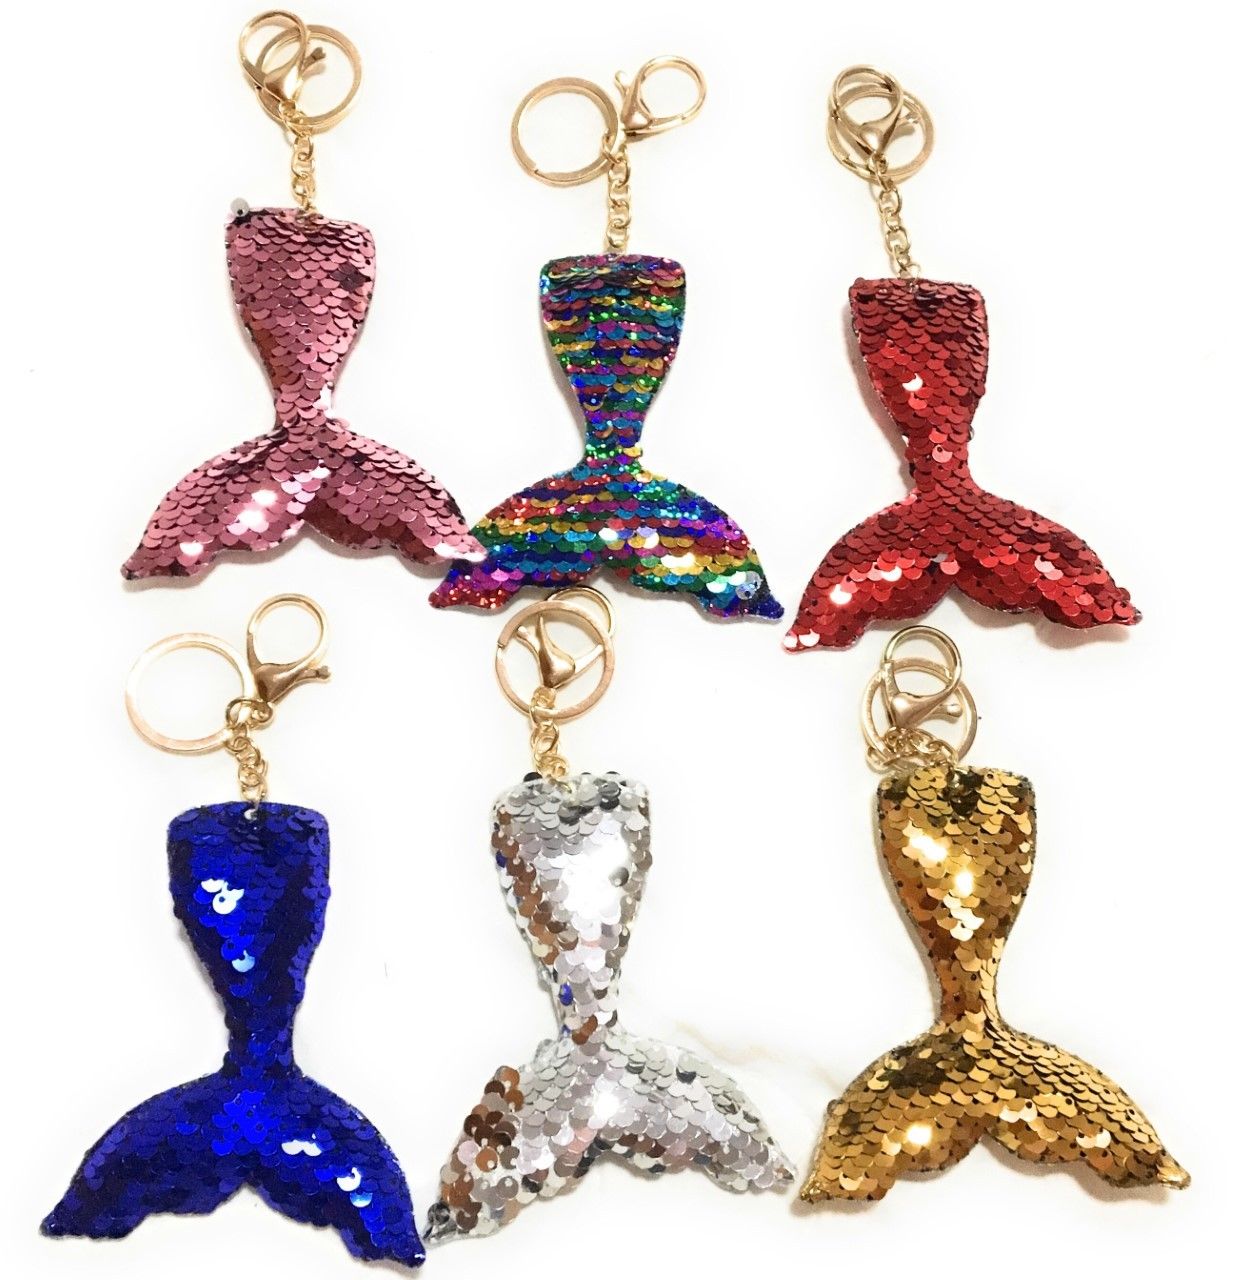 SEQUIN Mermaid Tail Keychain Keyring Handbag Bag Charm Girls Xmas Stocking Party Bag Filler